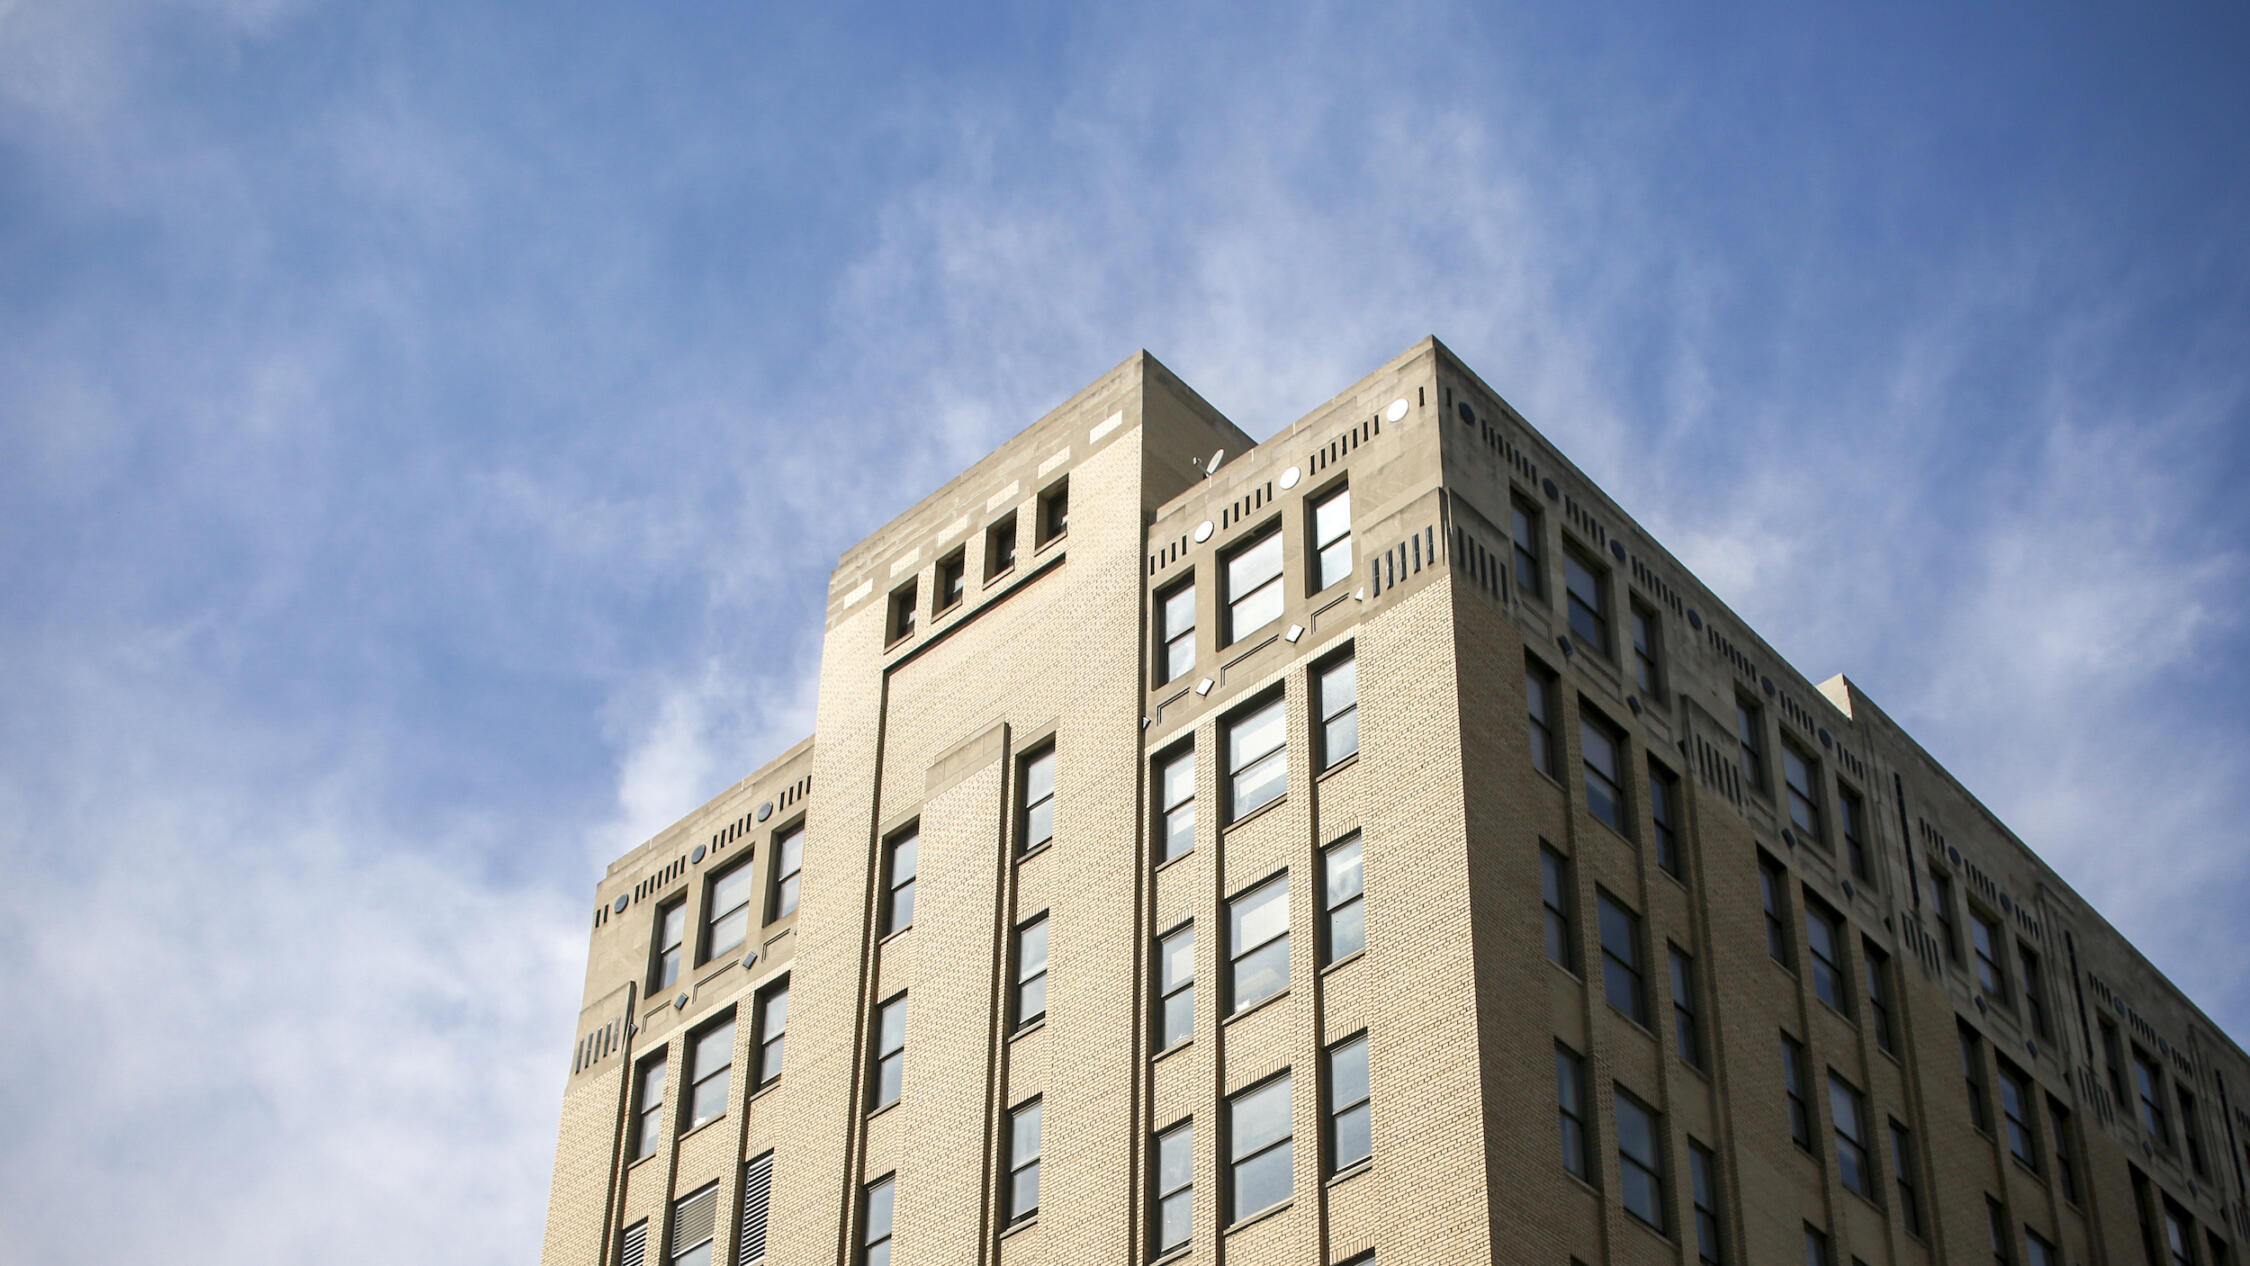 260 East 161st Street building upper floors framed against cloudy blue sky